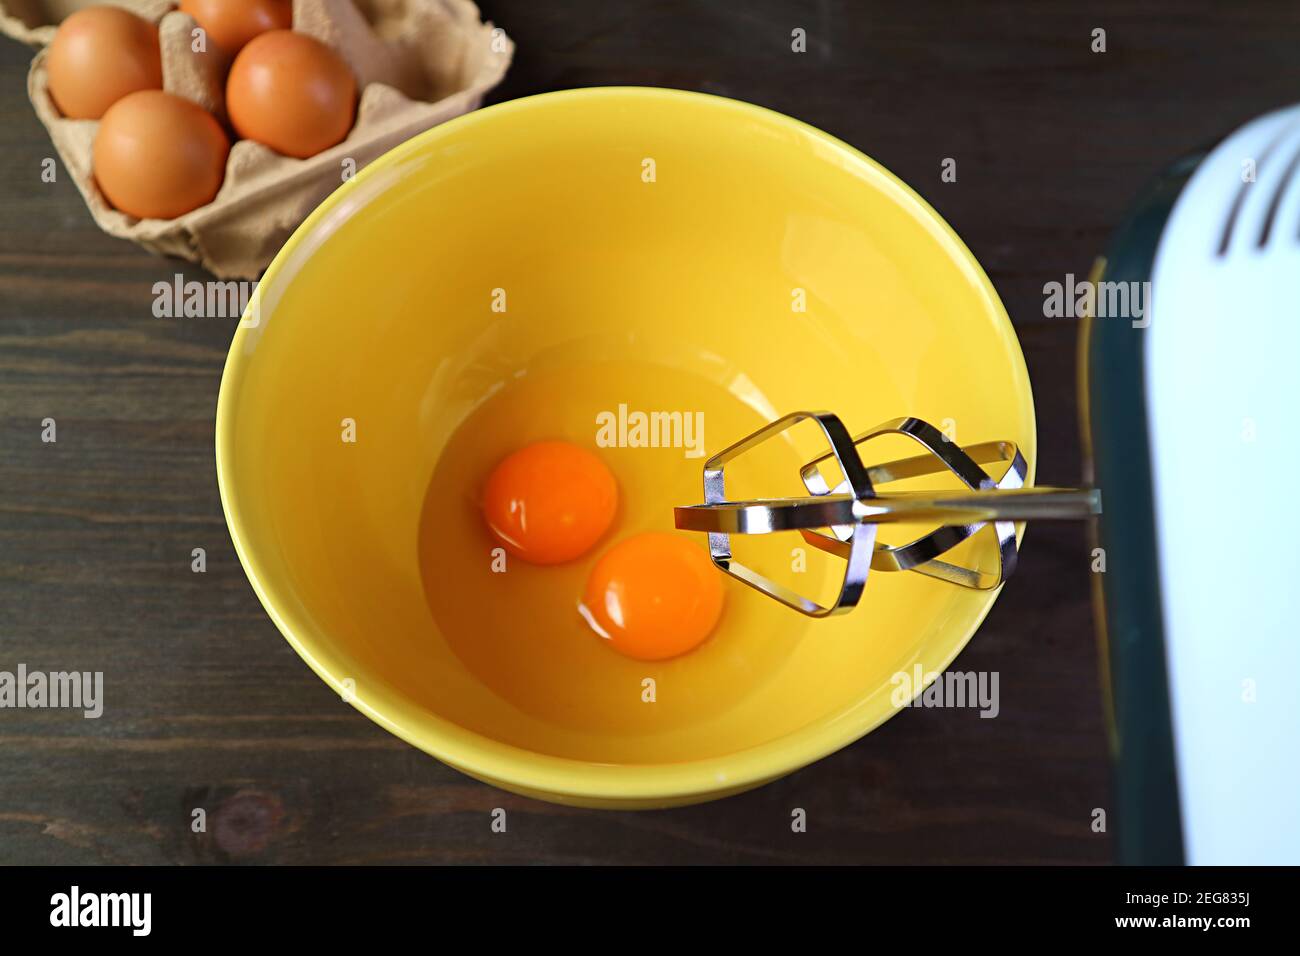 https://c8.alamy.com/comp/2EG835J/closeup-of-electric-egg-beater-going-to-beat-apair-of-raw-eggs-in-mixing-bowl-2EG835J.jpg